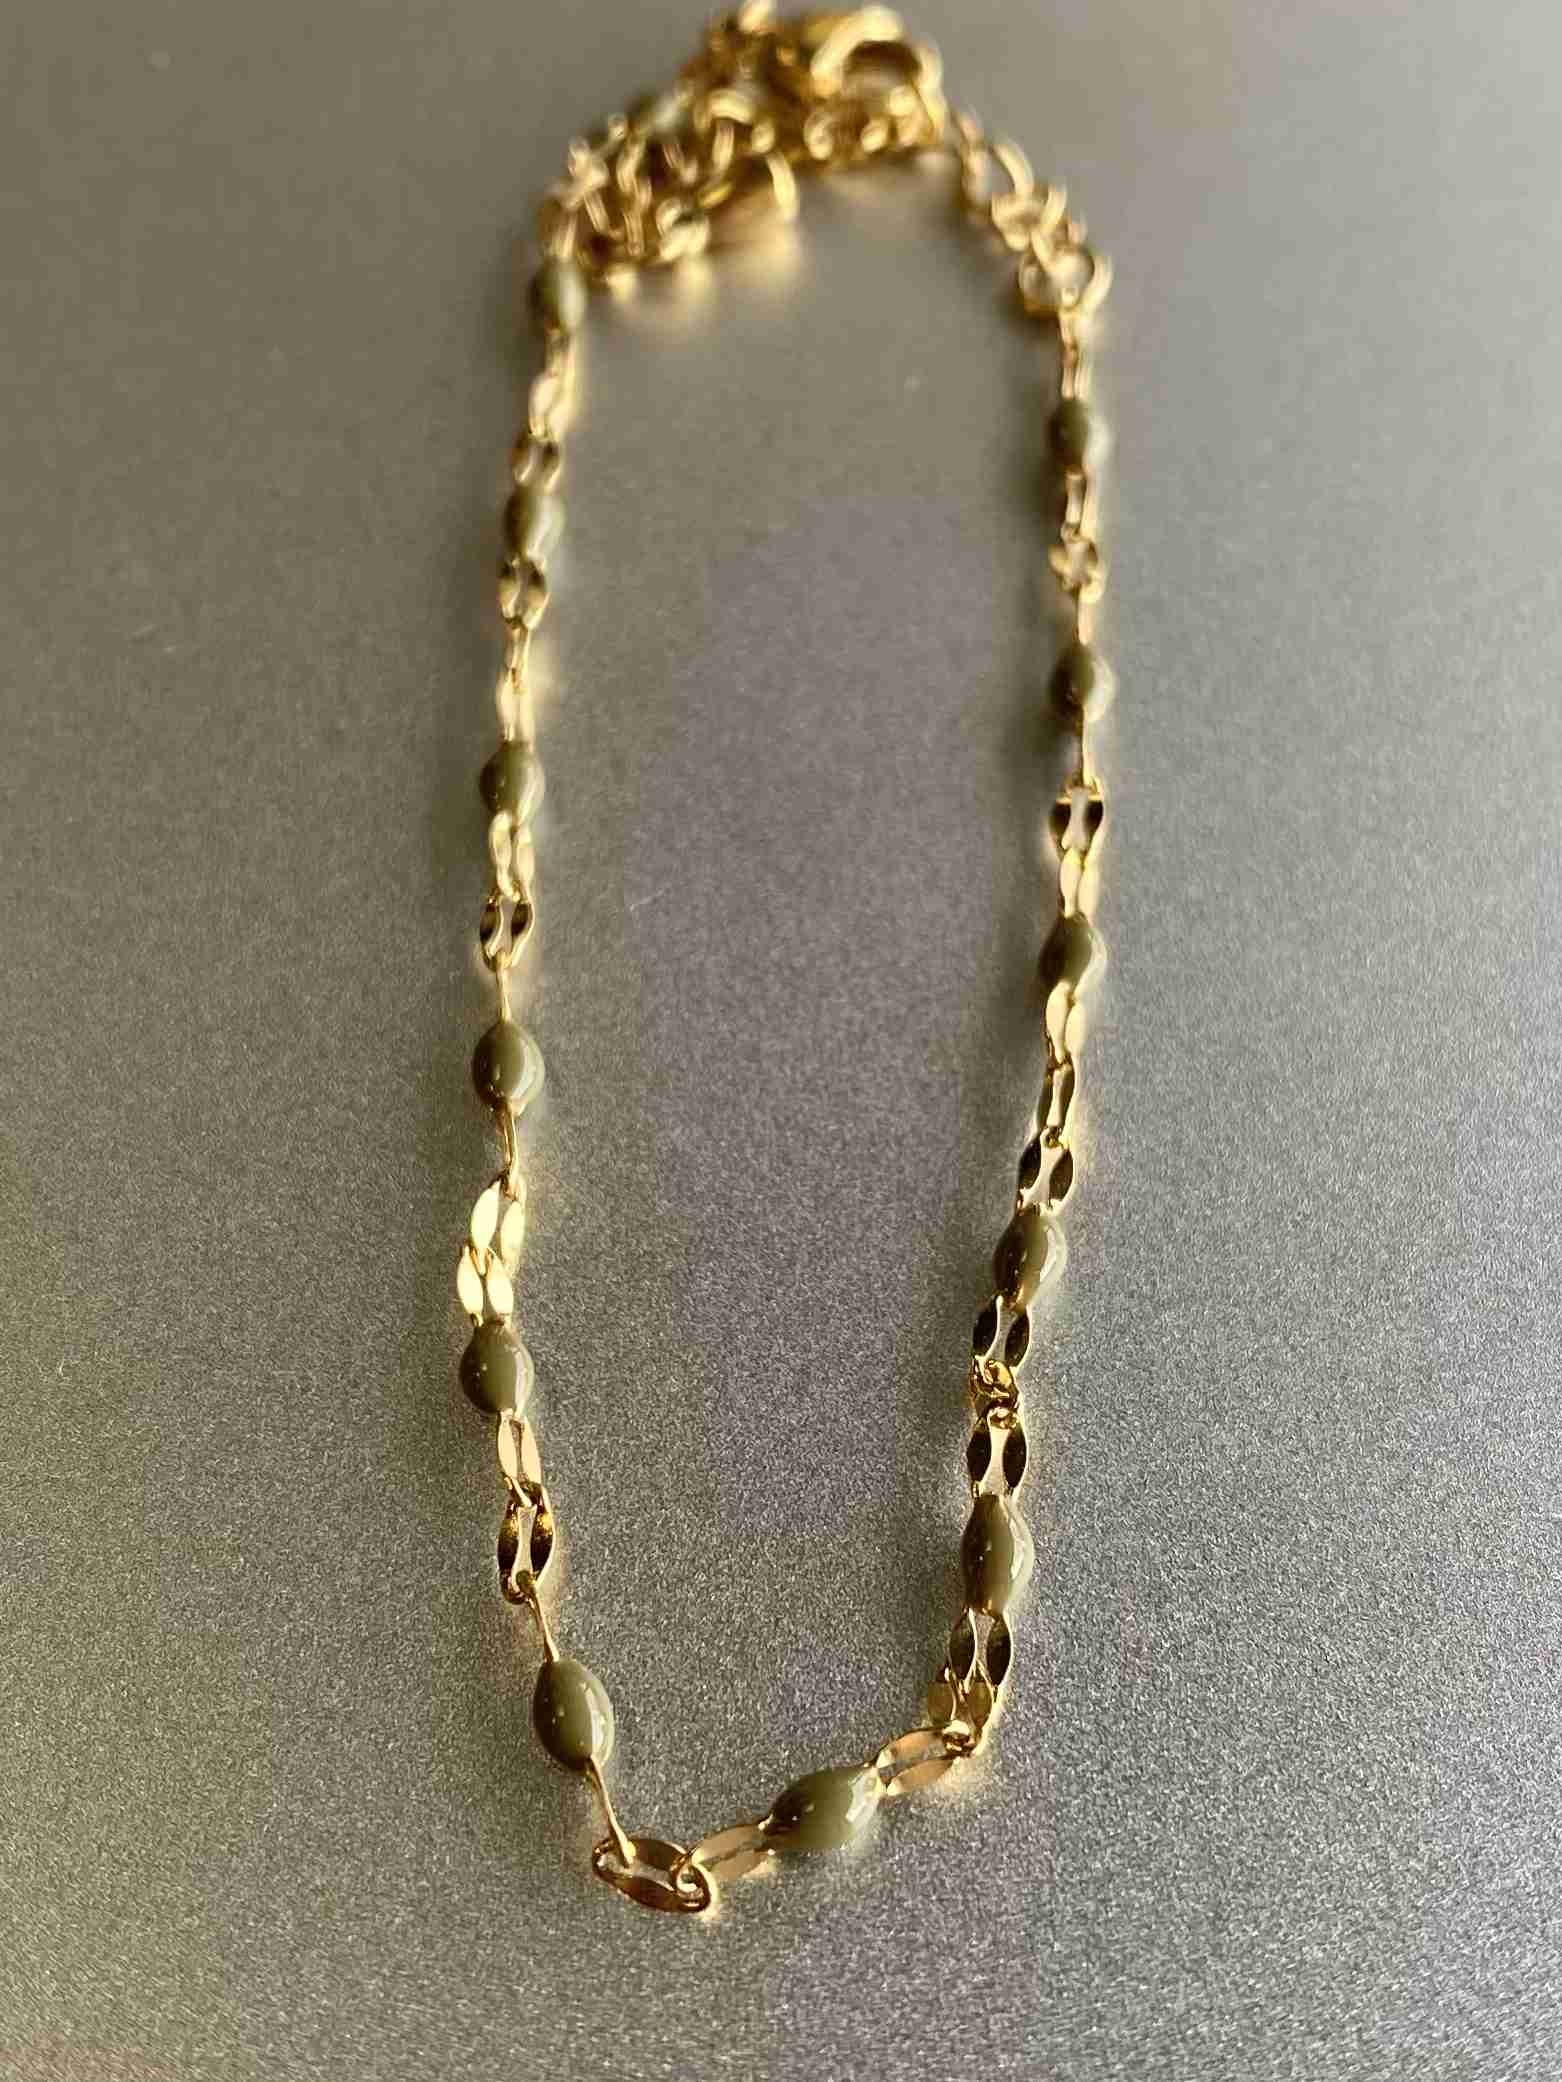 Collier Acier - Mini perles sur chaine maille ovale brillante